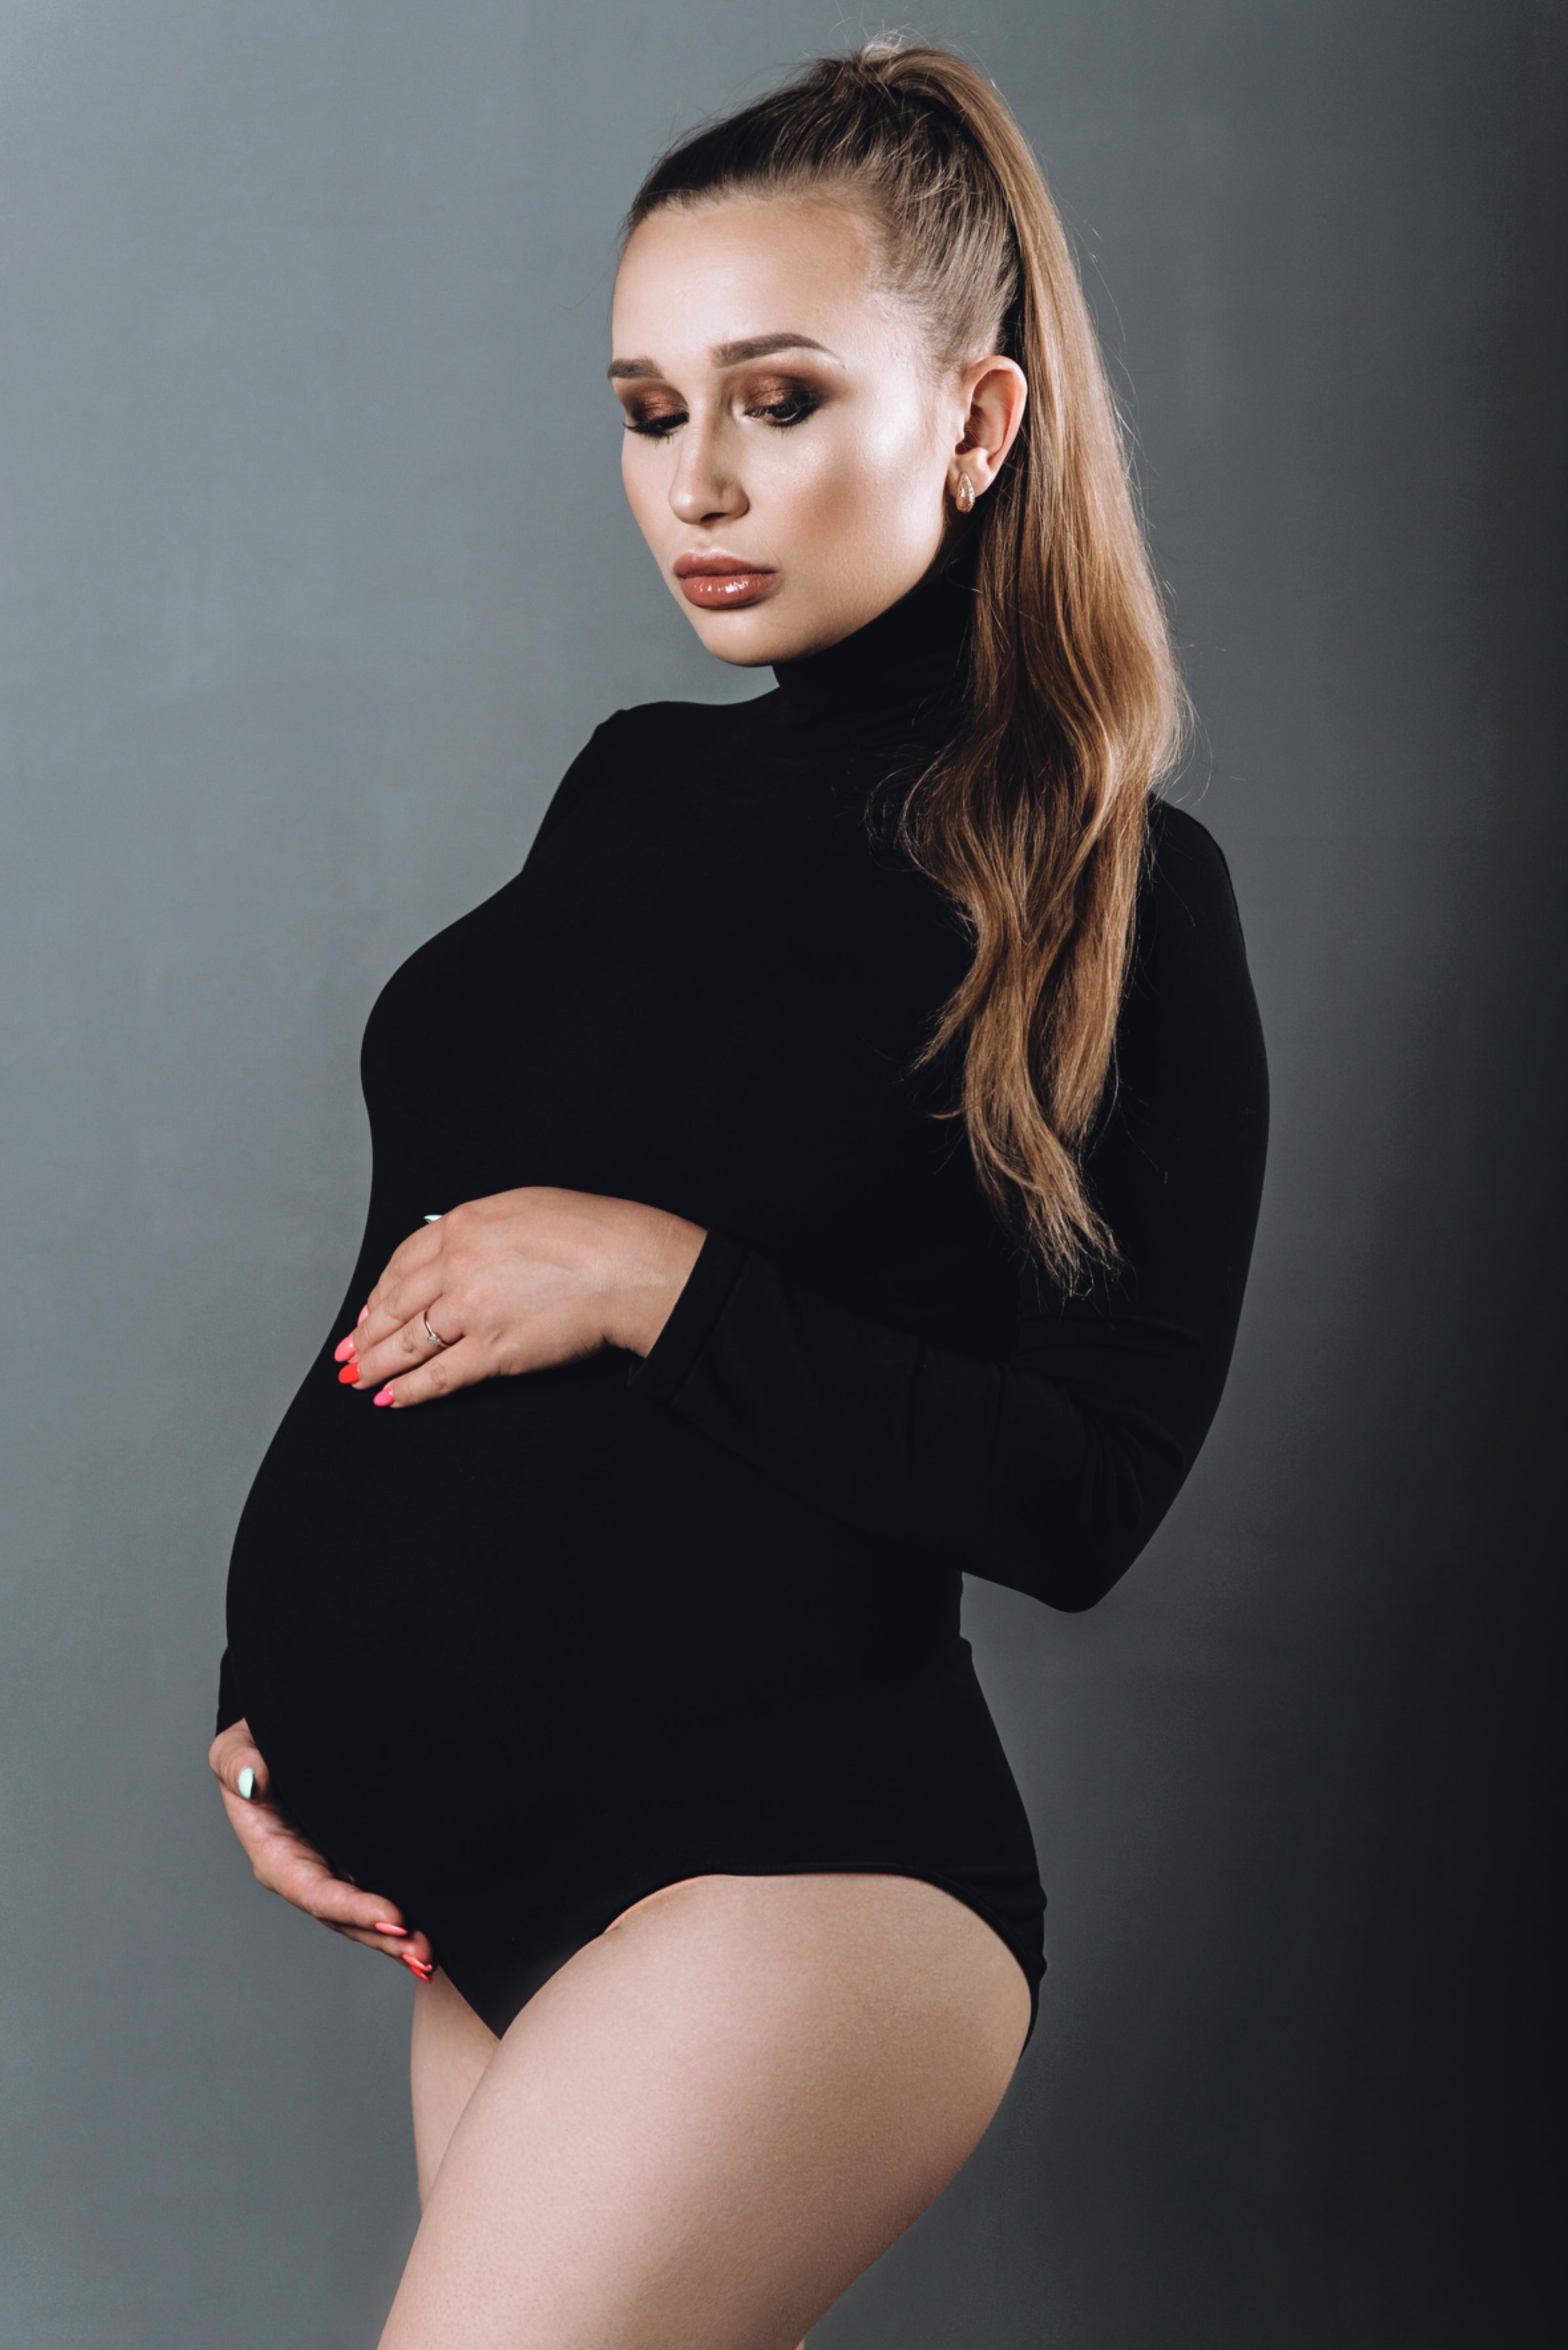 Pregnancy shoot inspiration